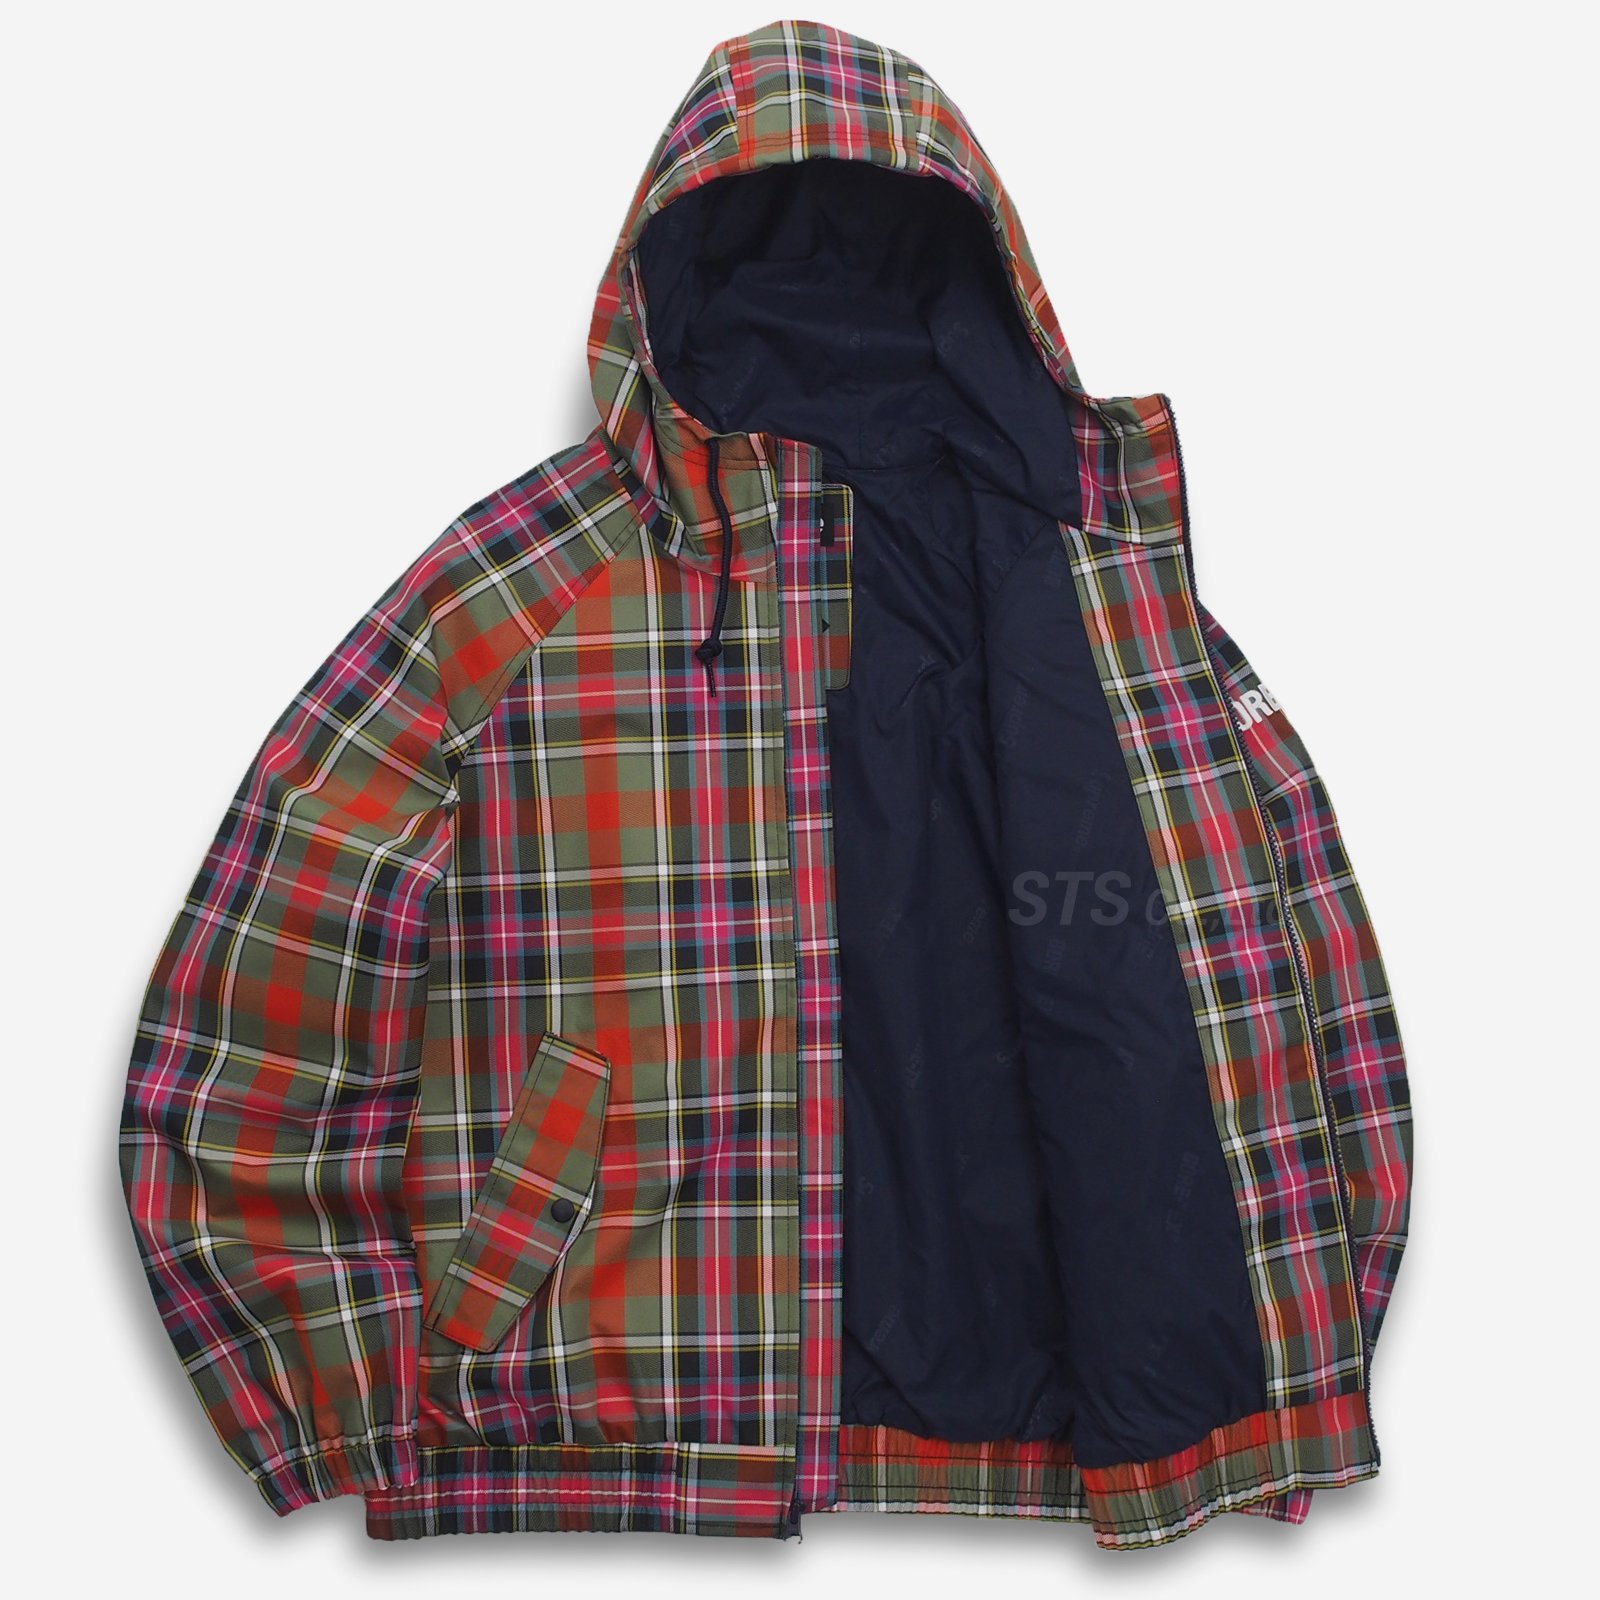 GORE-TEX Hooded Harrington jacket